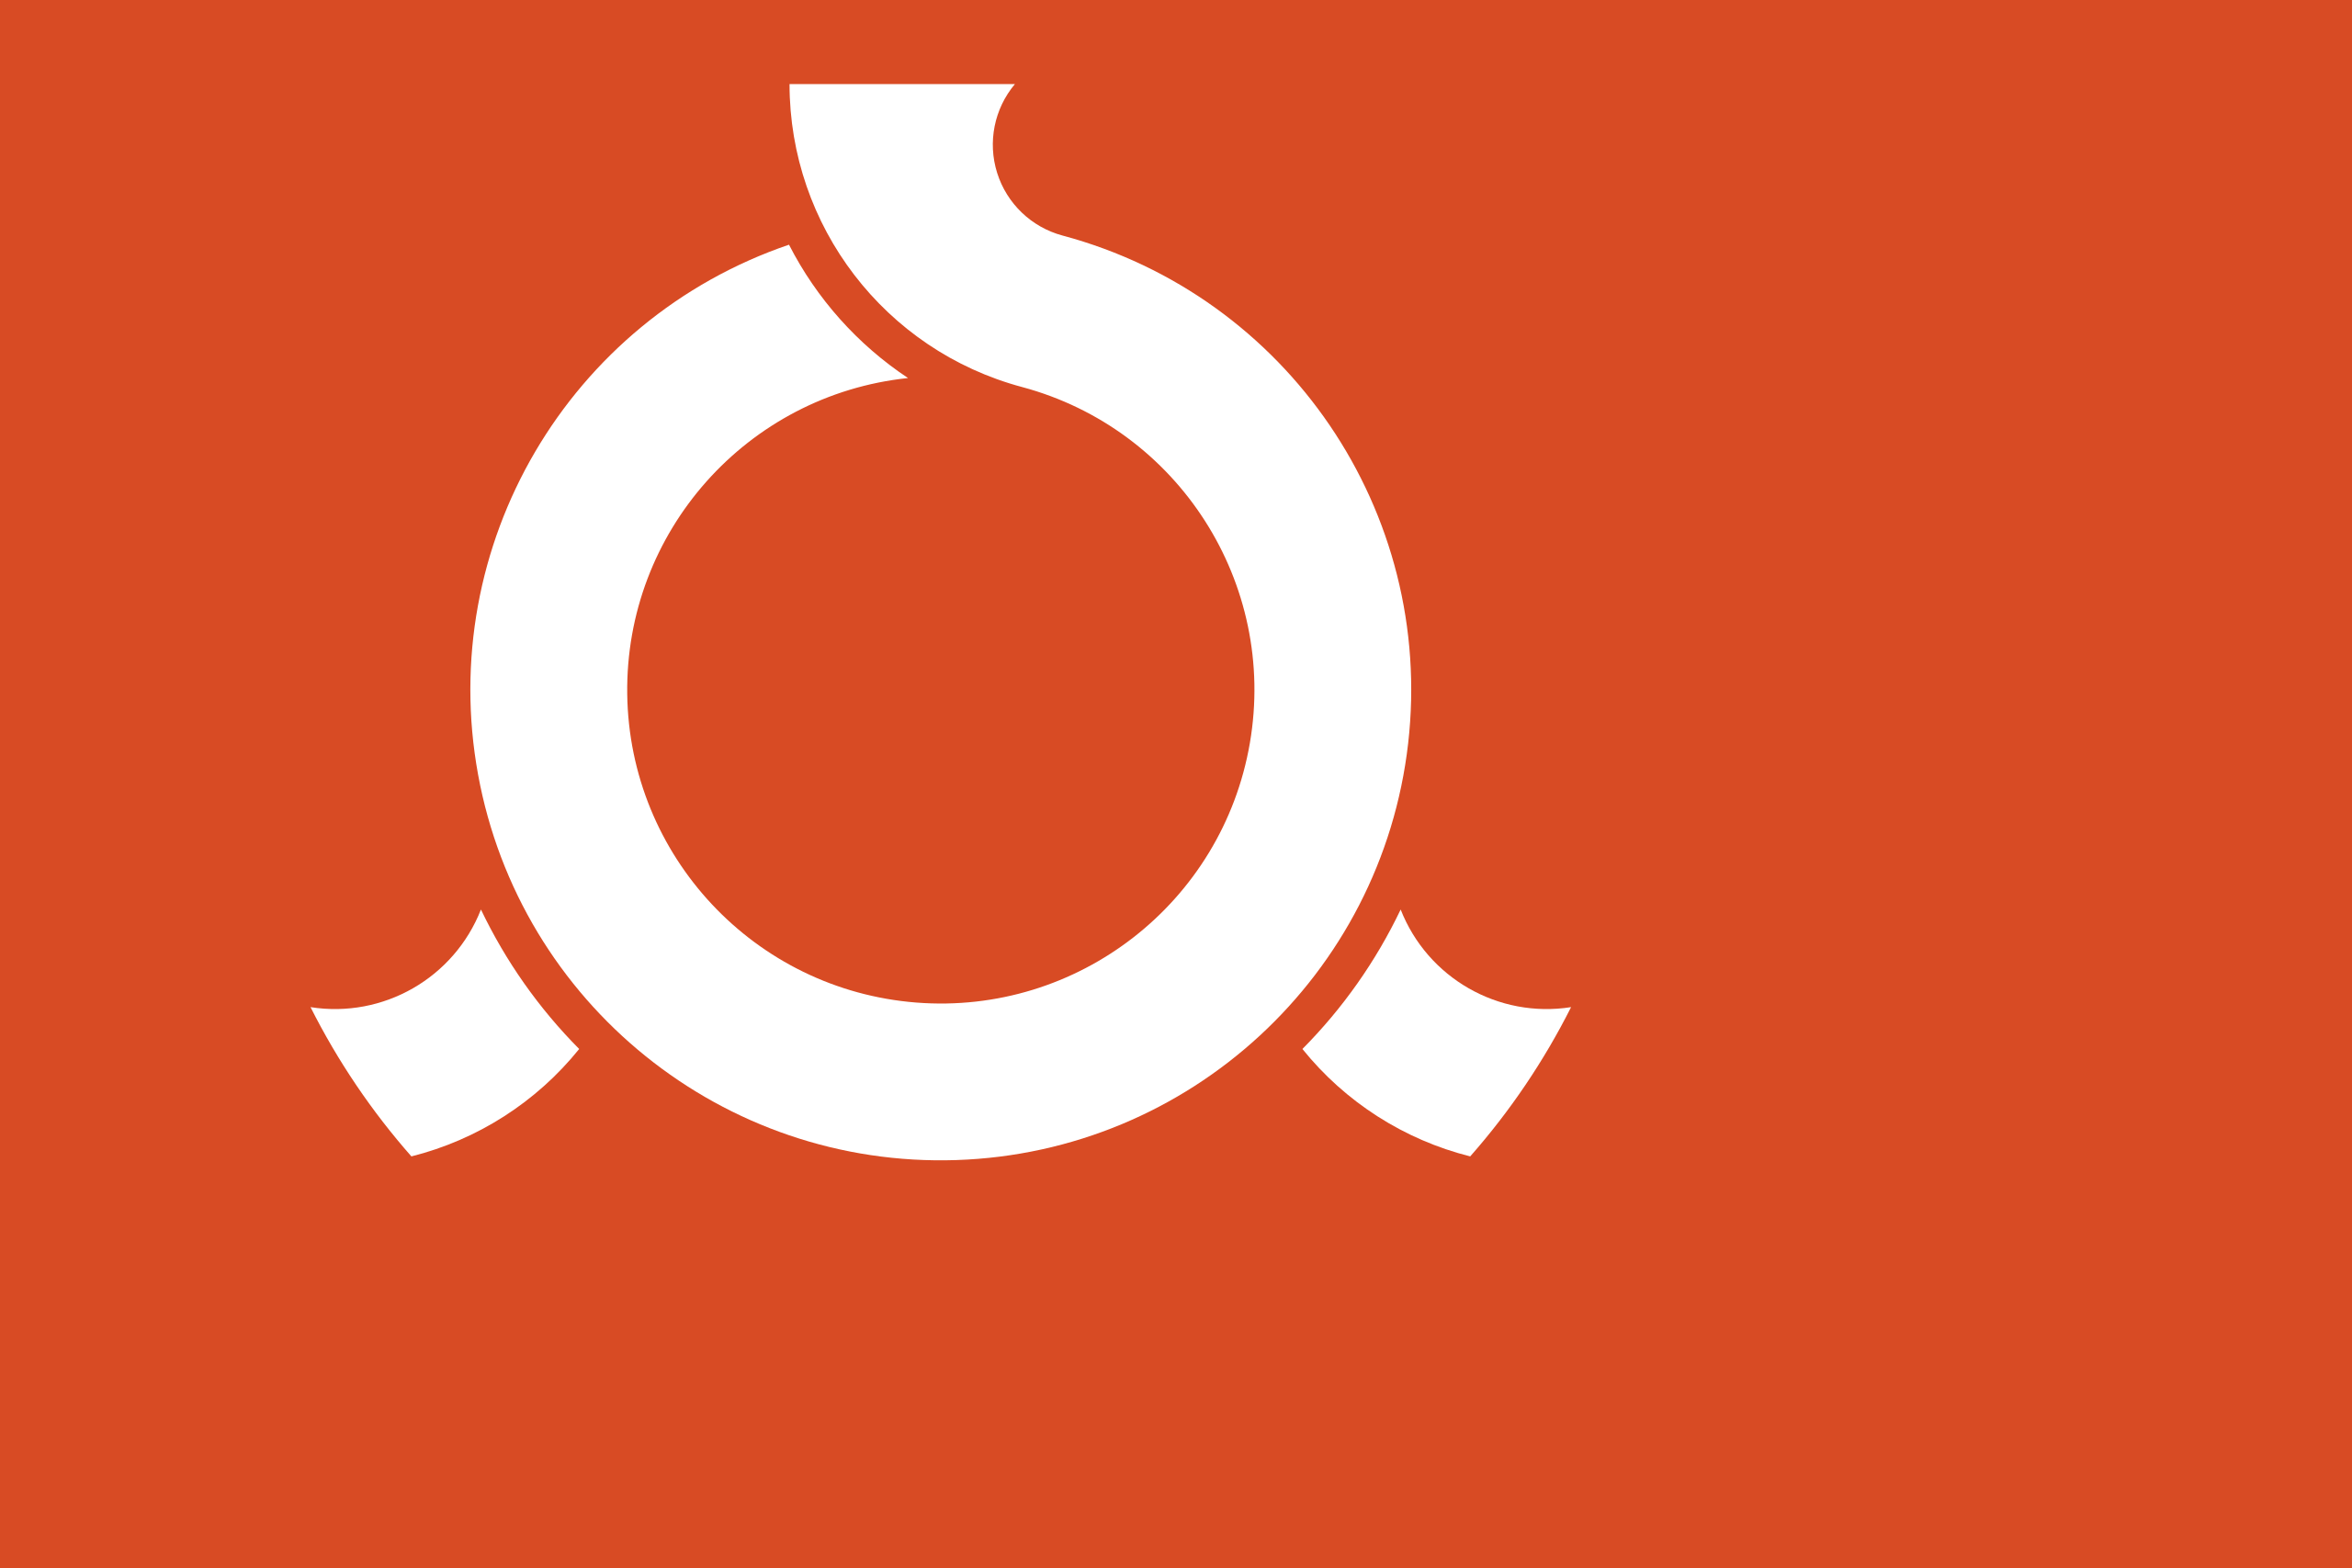 yamagata flag